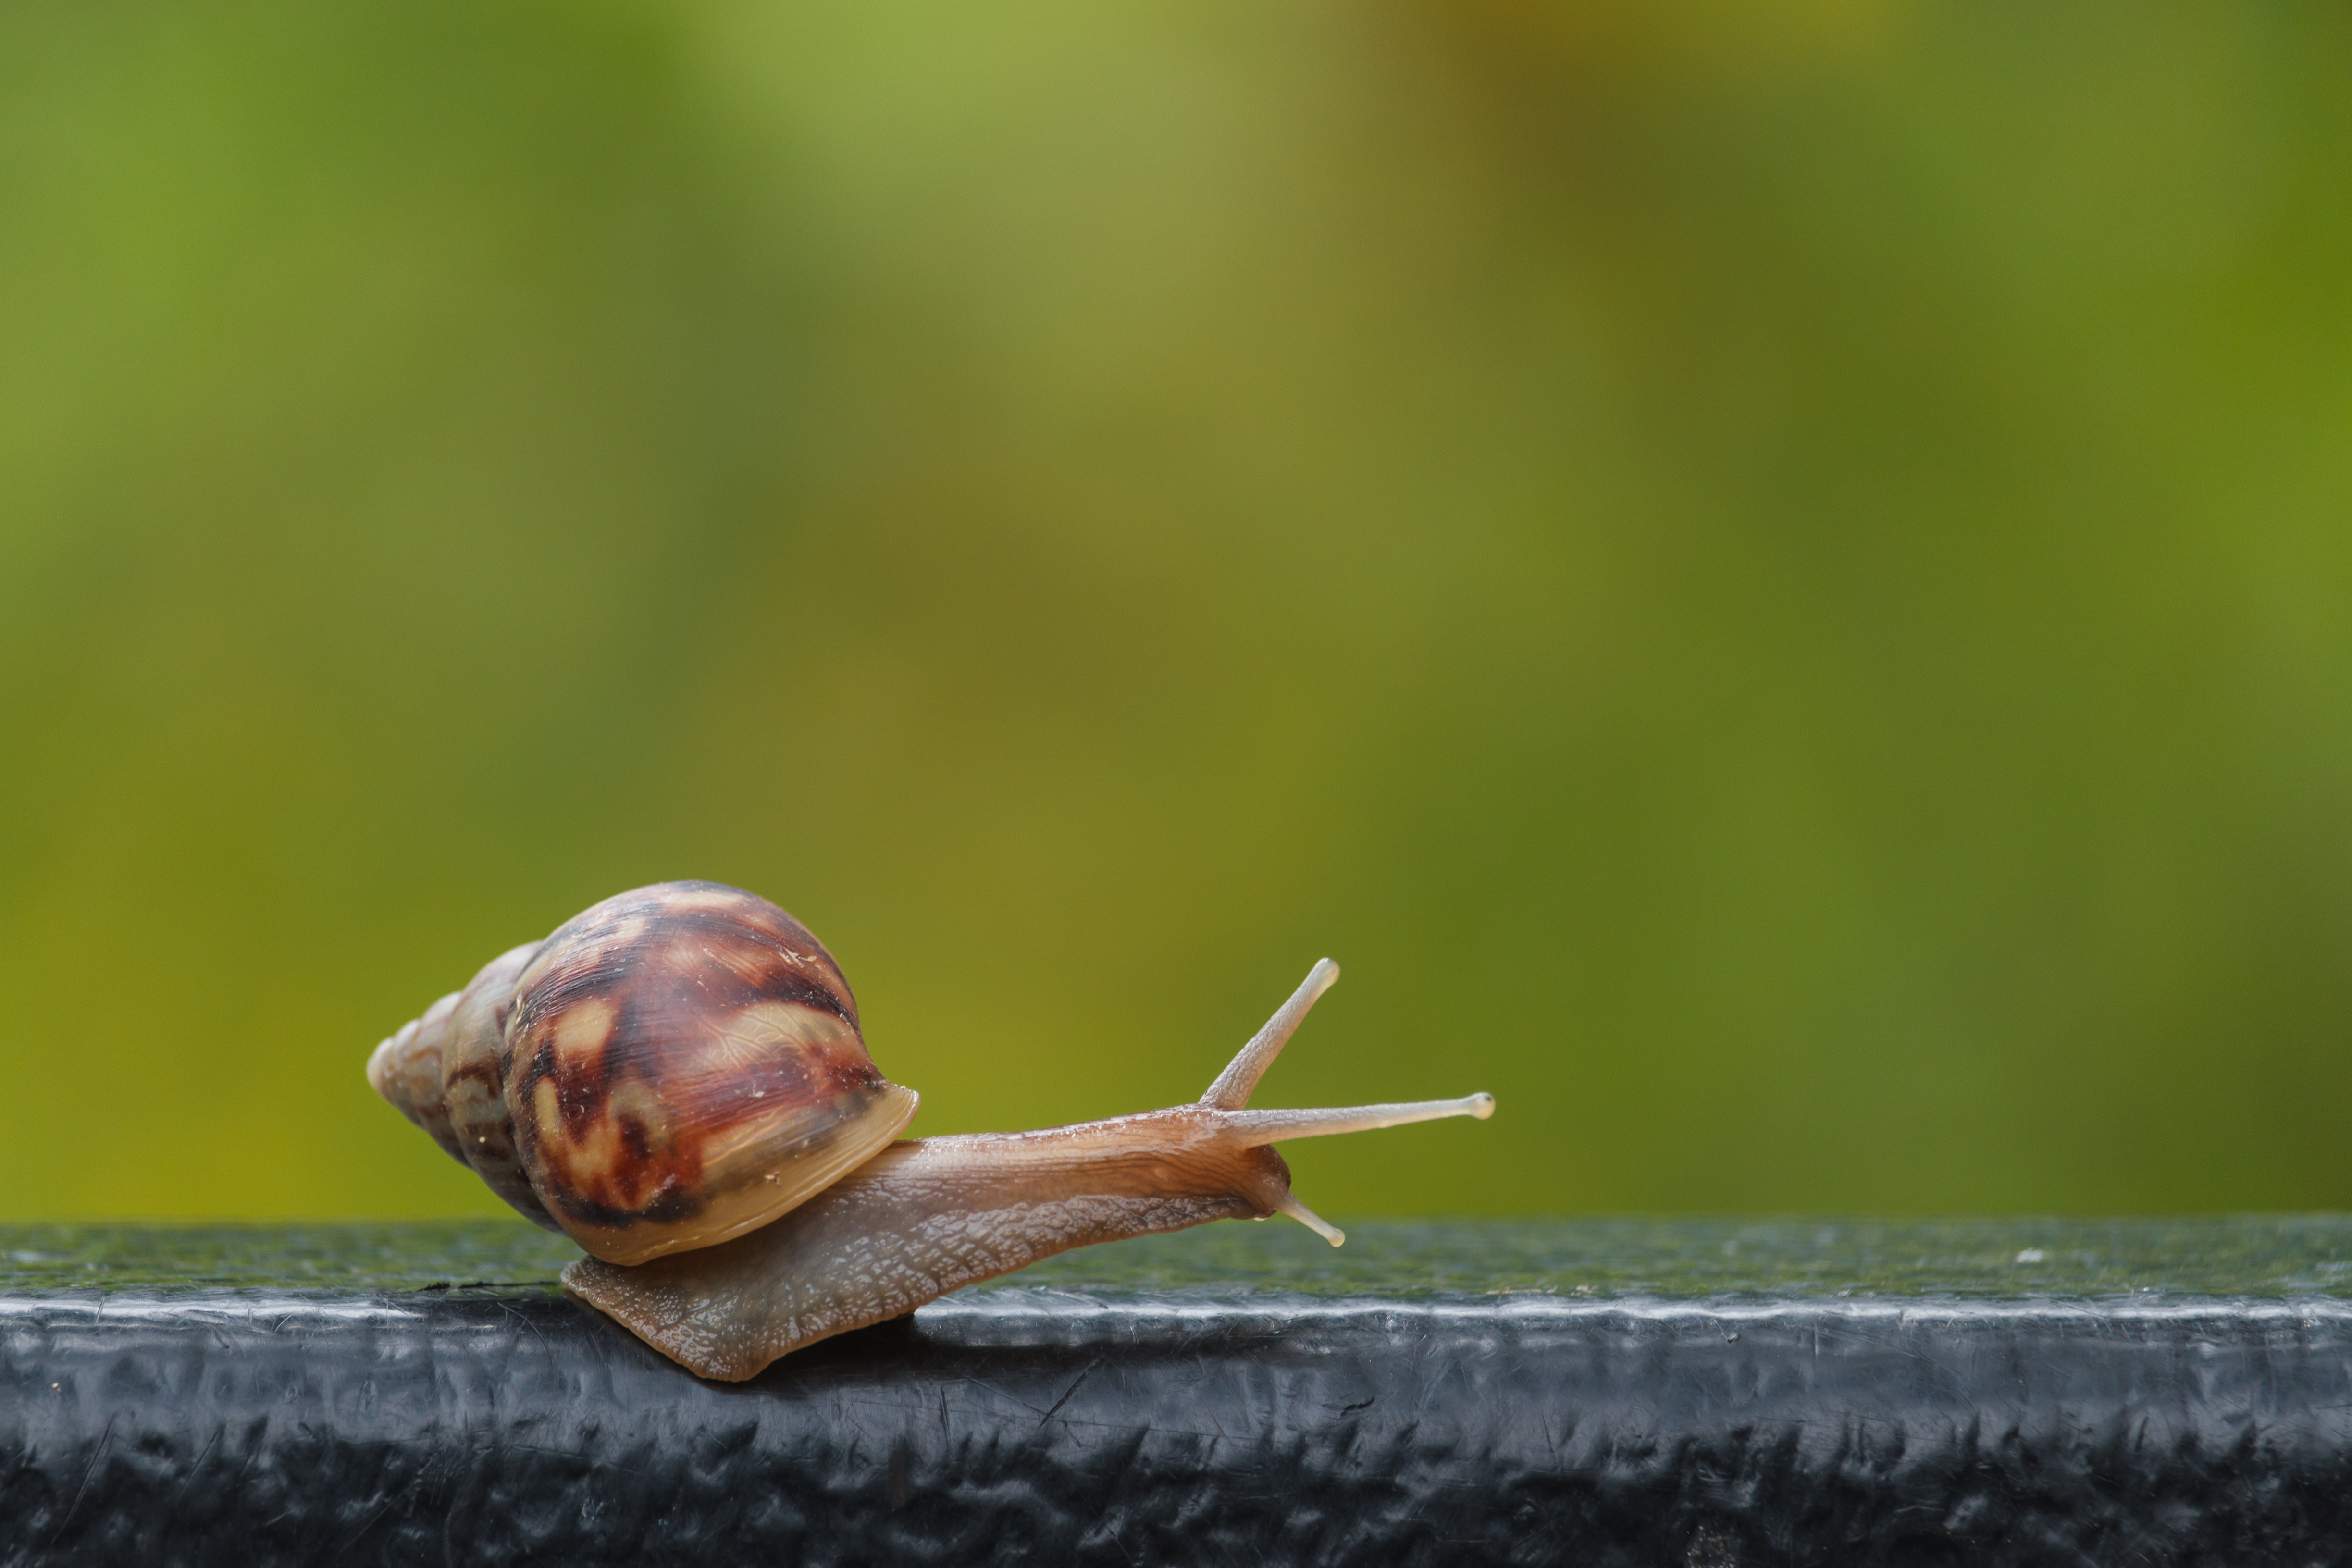 Characteristics of Snails & Slugs | Sciencing